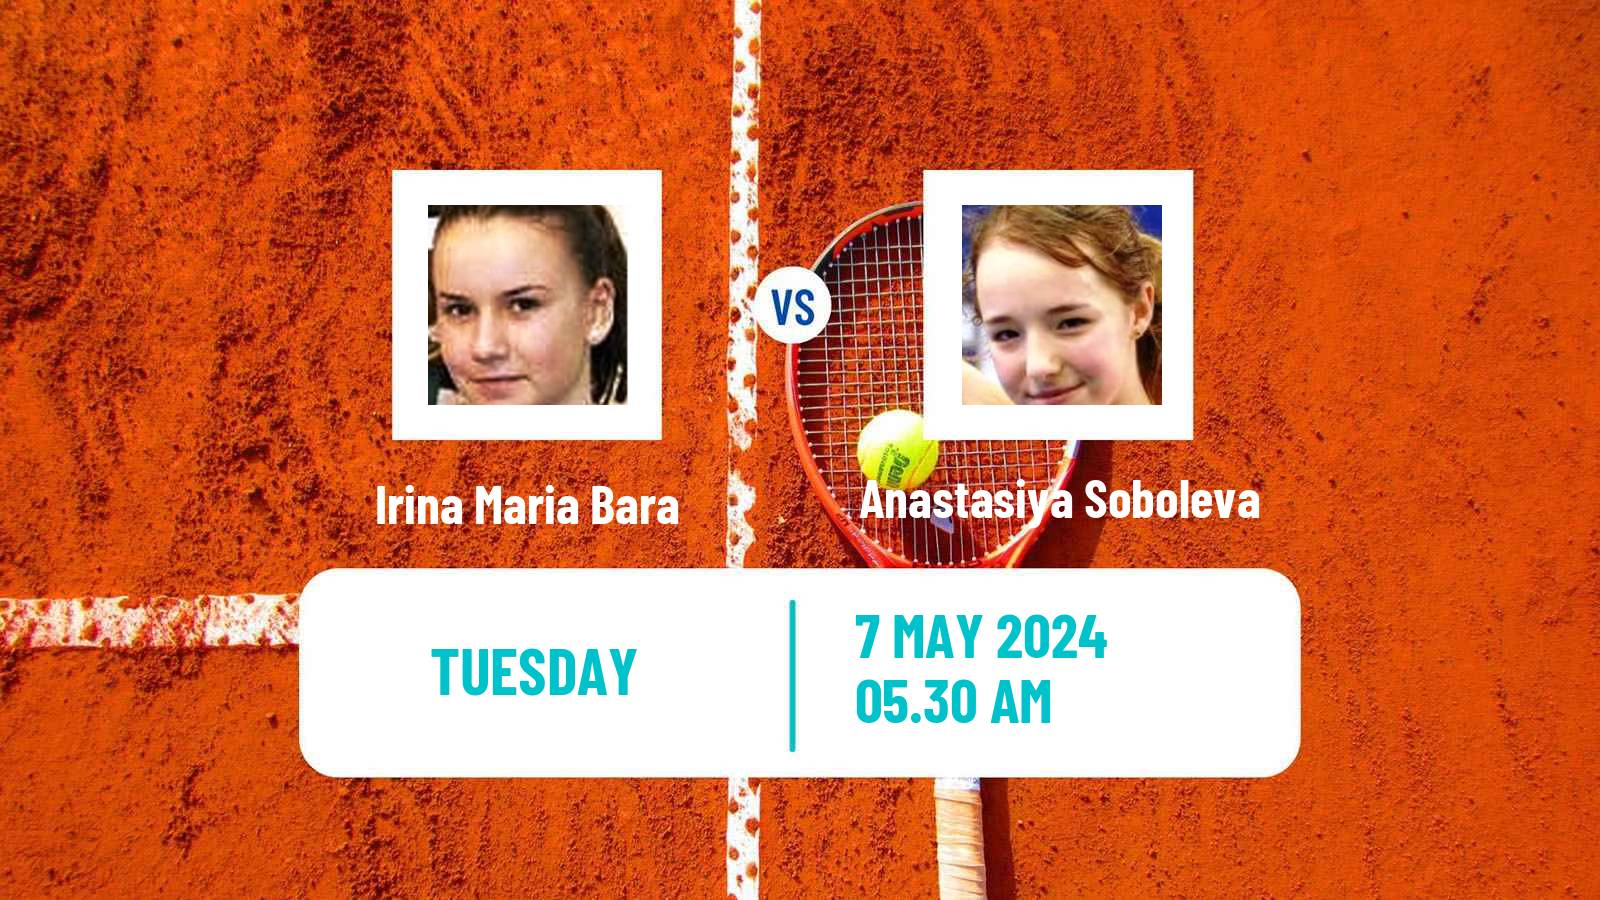 Tennis ITF W75 Trnava 2 Women Irina Maria Bara - Anastasiya Soboleva